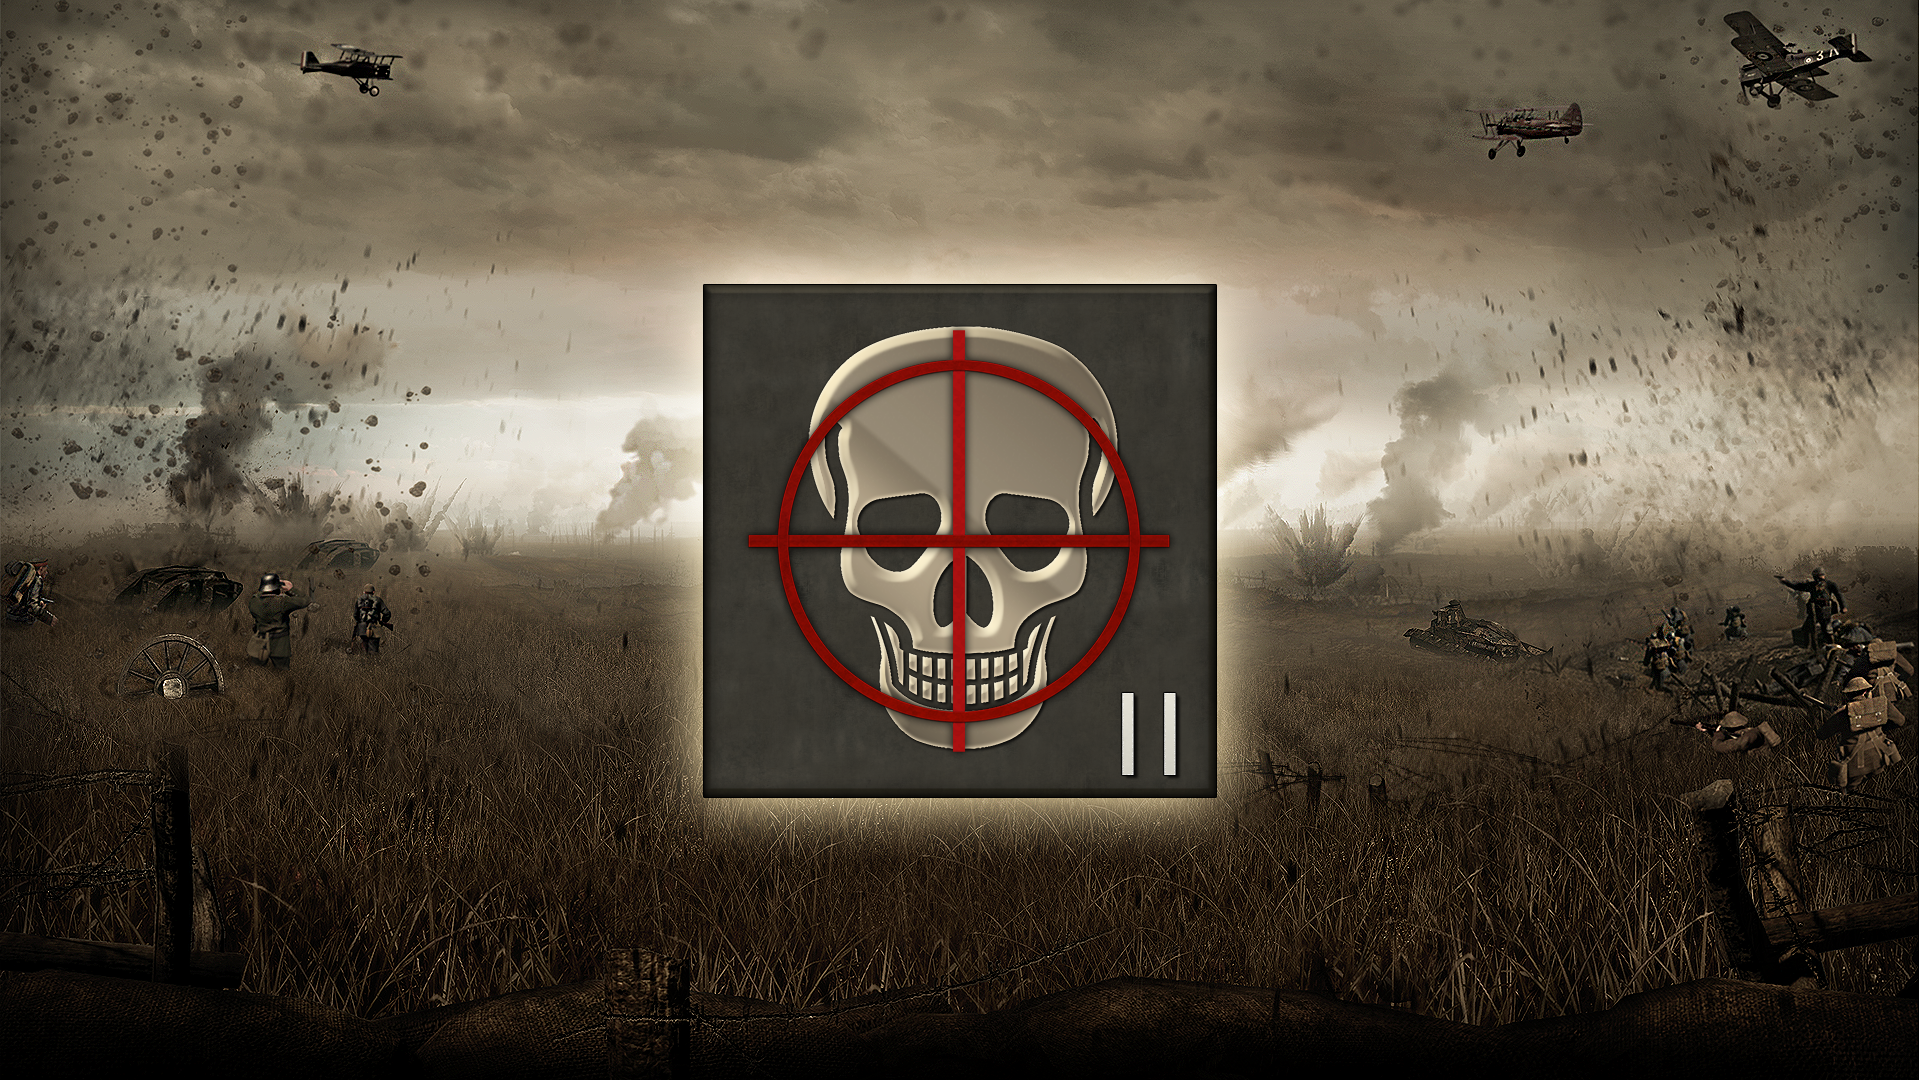 Icon for Headhunter II